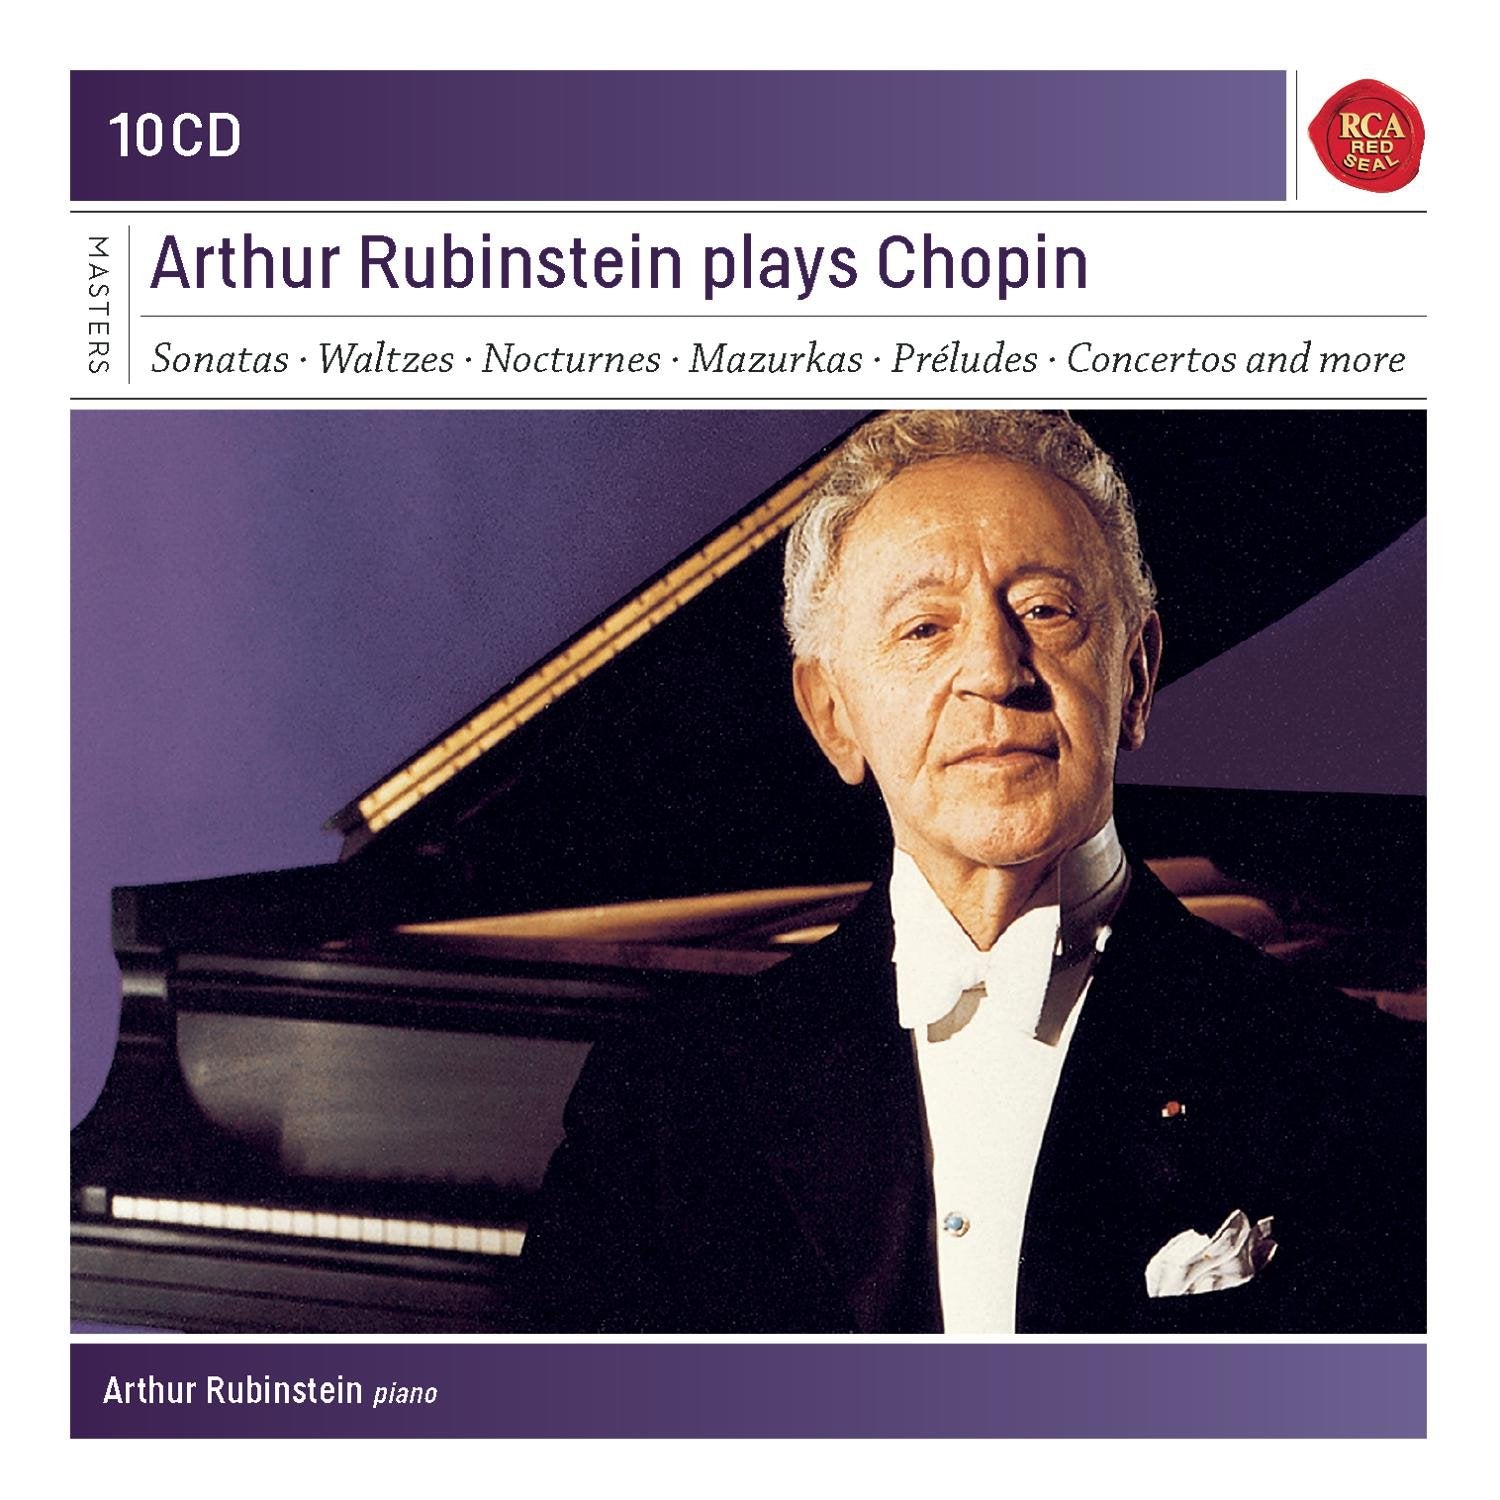 Rubinstein plays Chopin